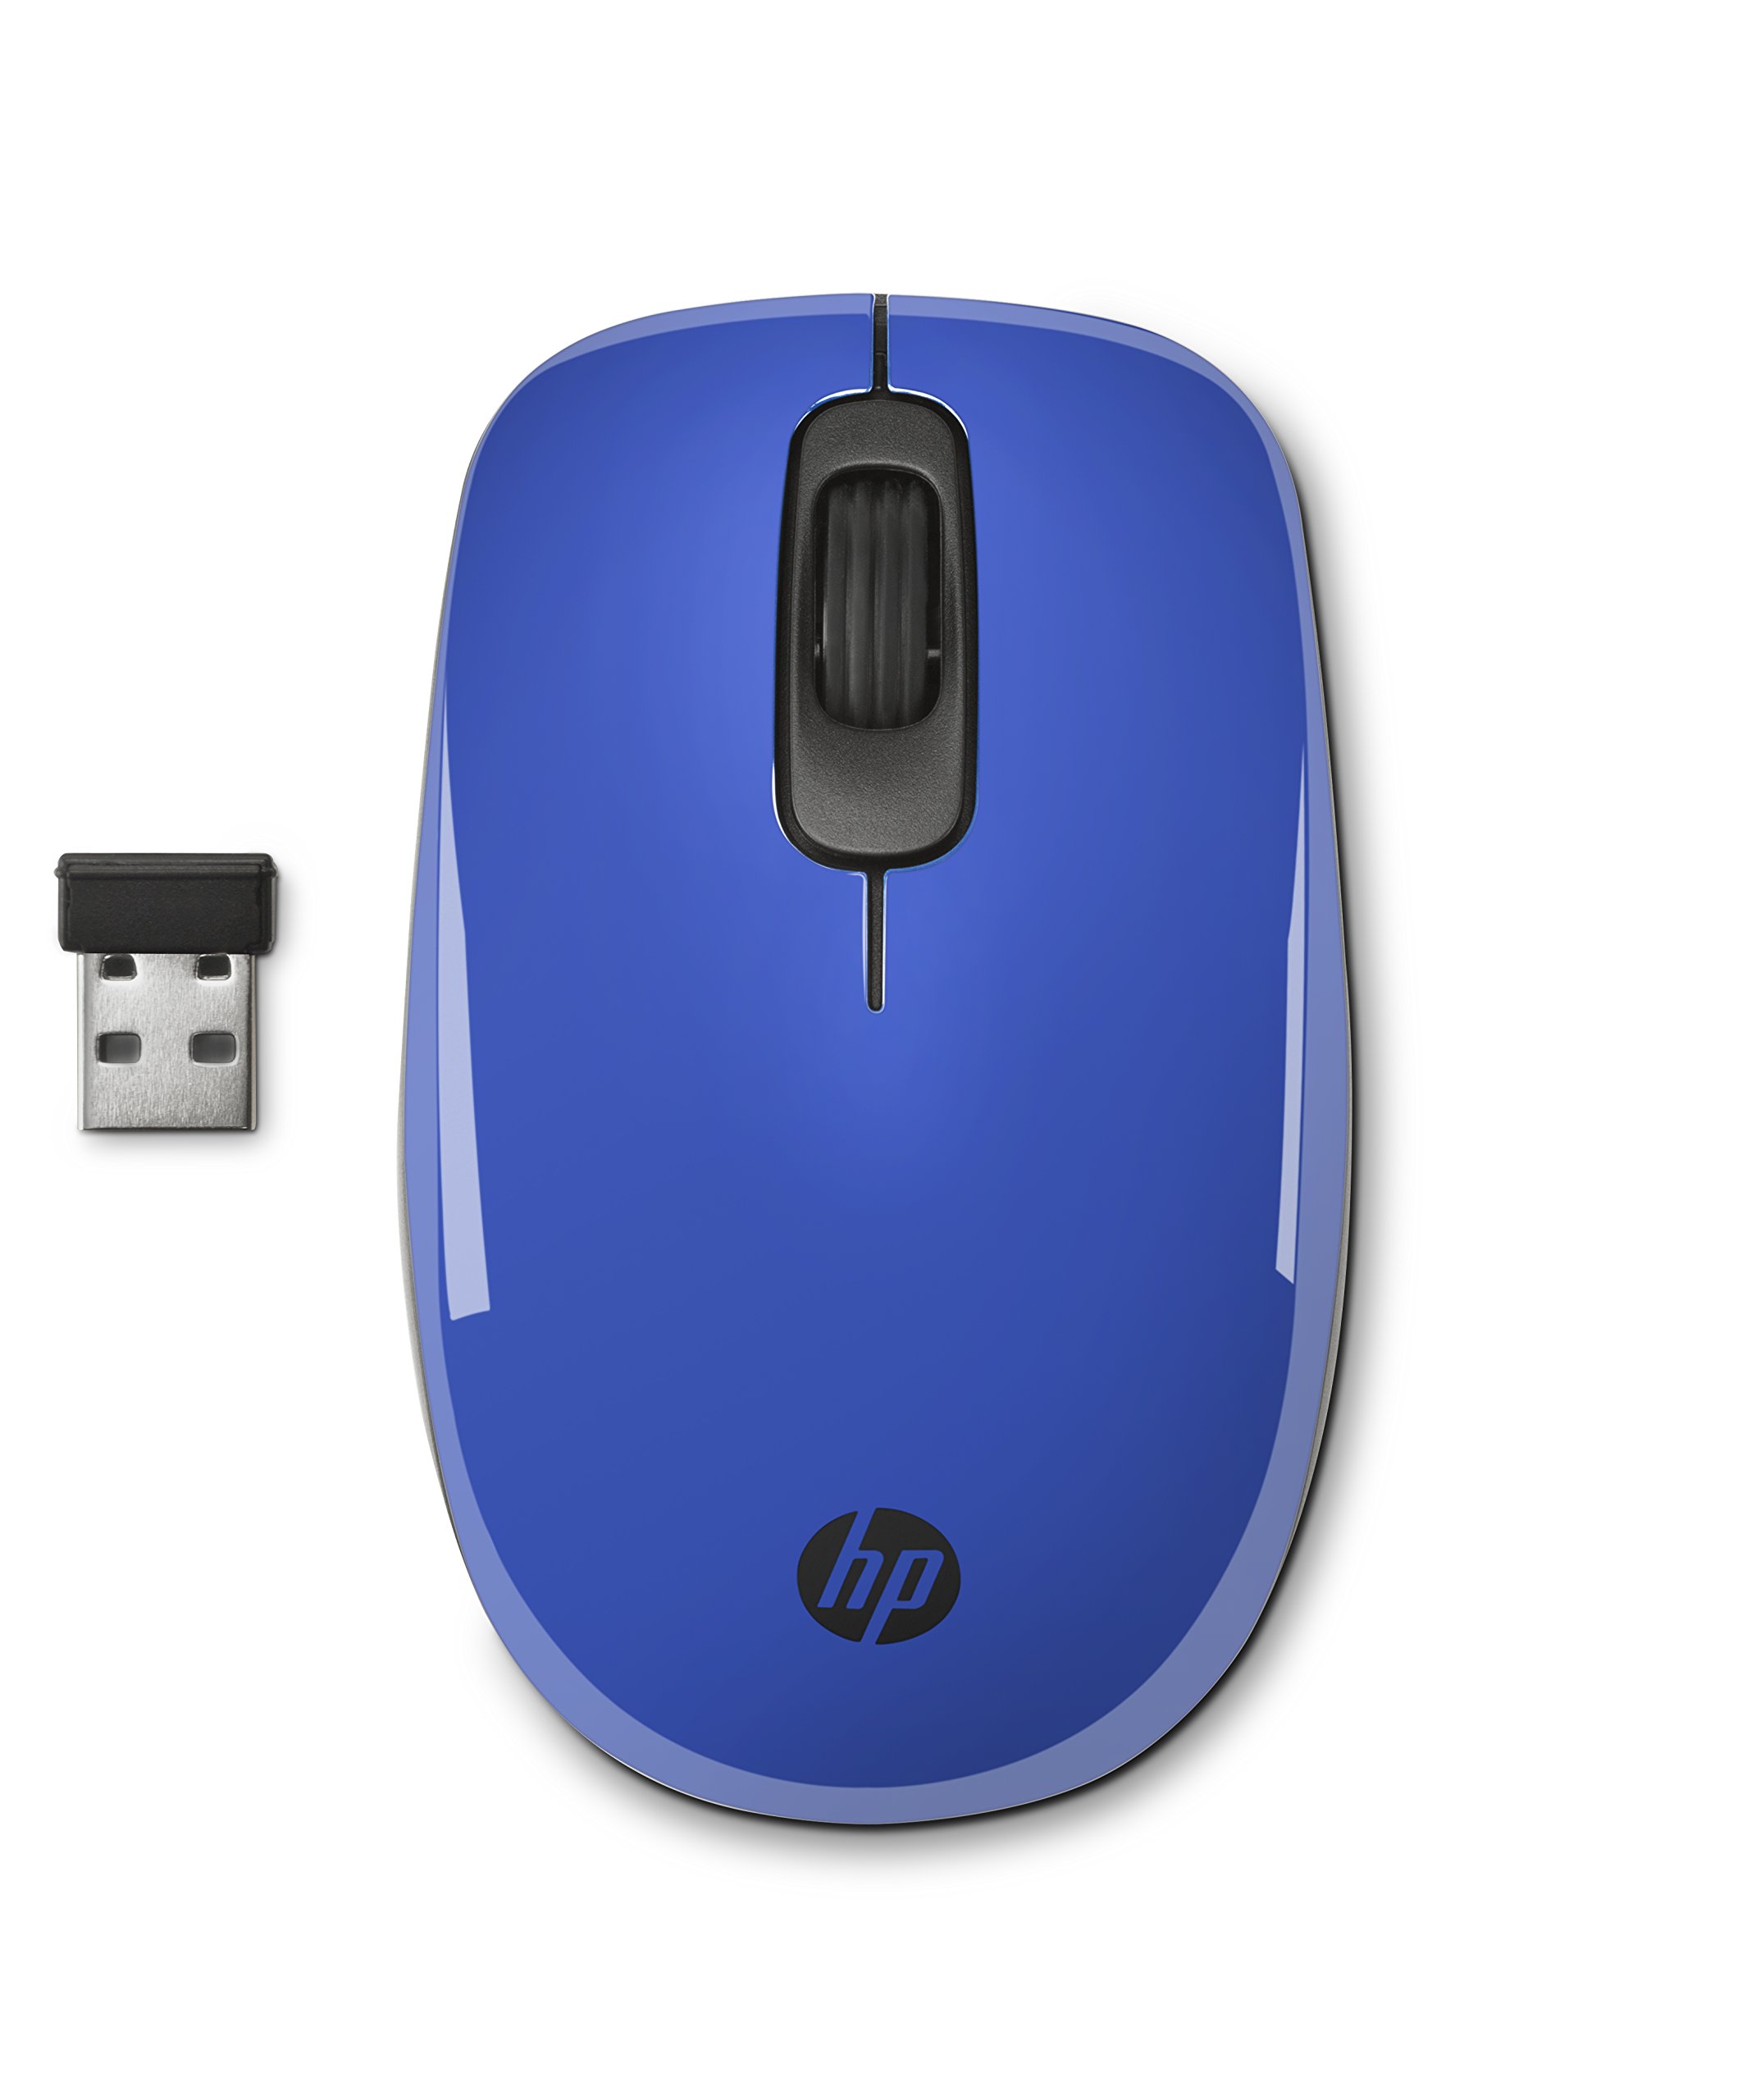 HP J1B52AA#ABA Wireless Mouse, Blue - image 3 of 5